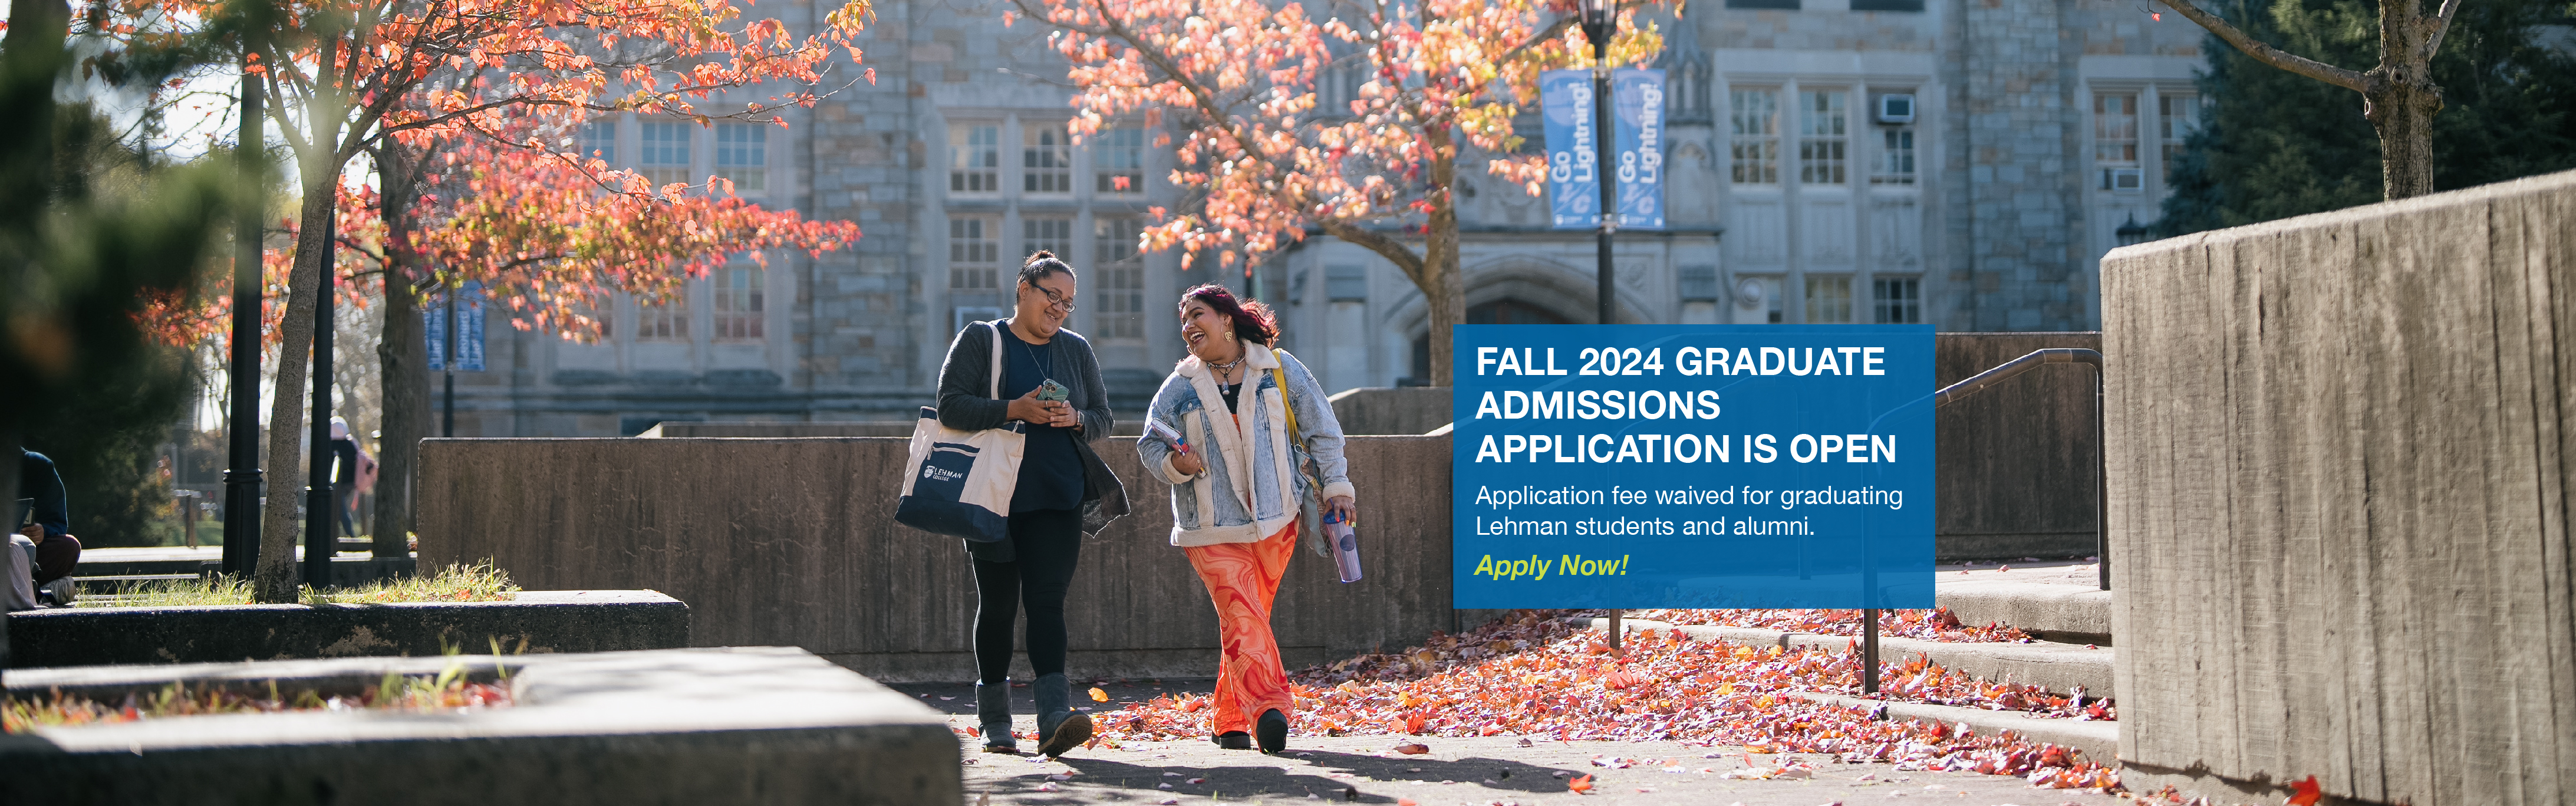 Fall 2024 Graduate Admissions Open